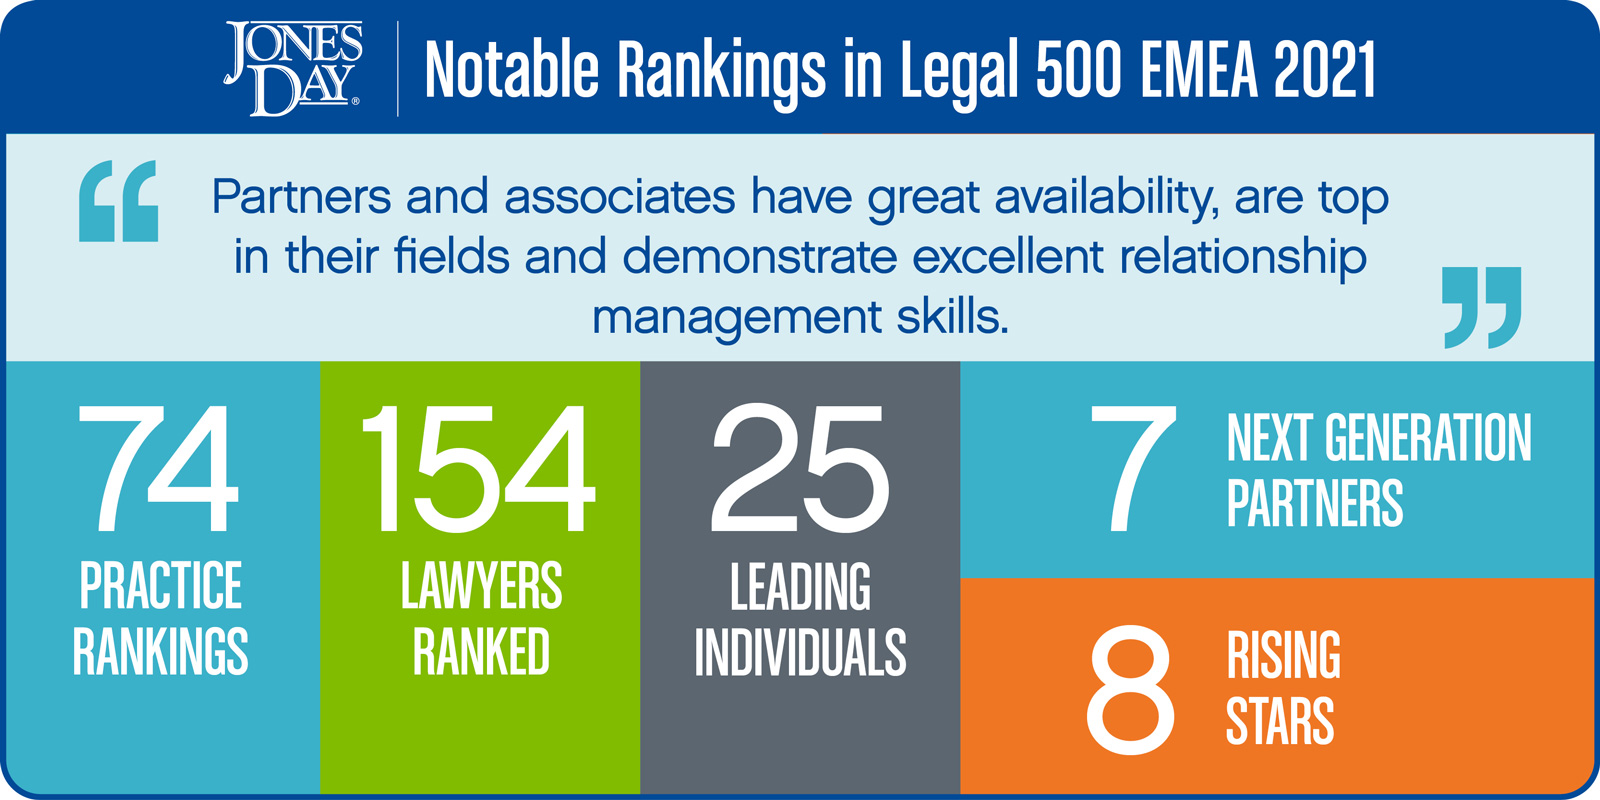 Legal_500_EMEA_Infographic_2021_SOCIAL